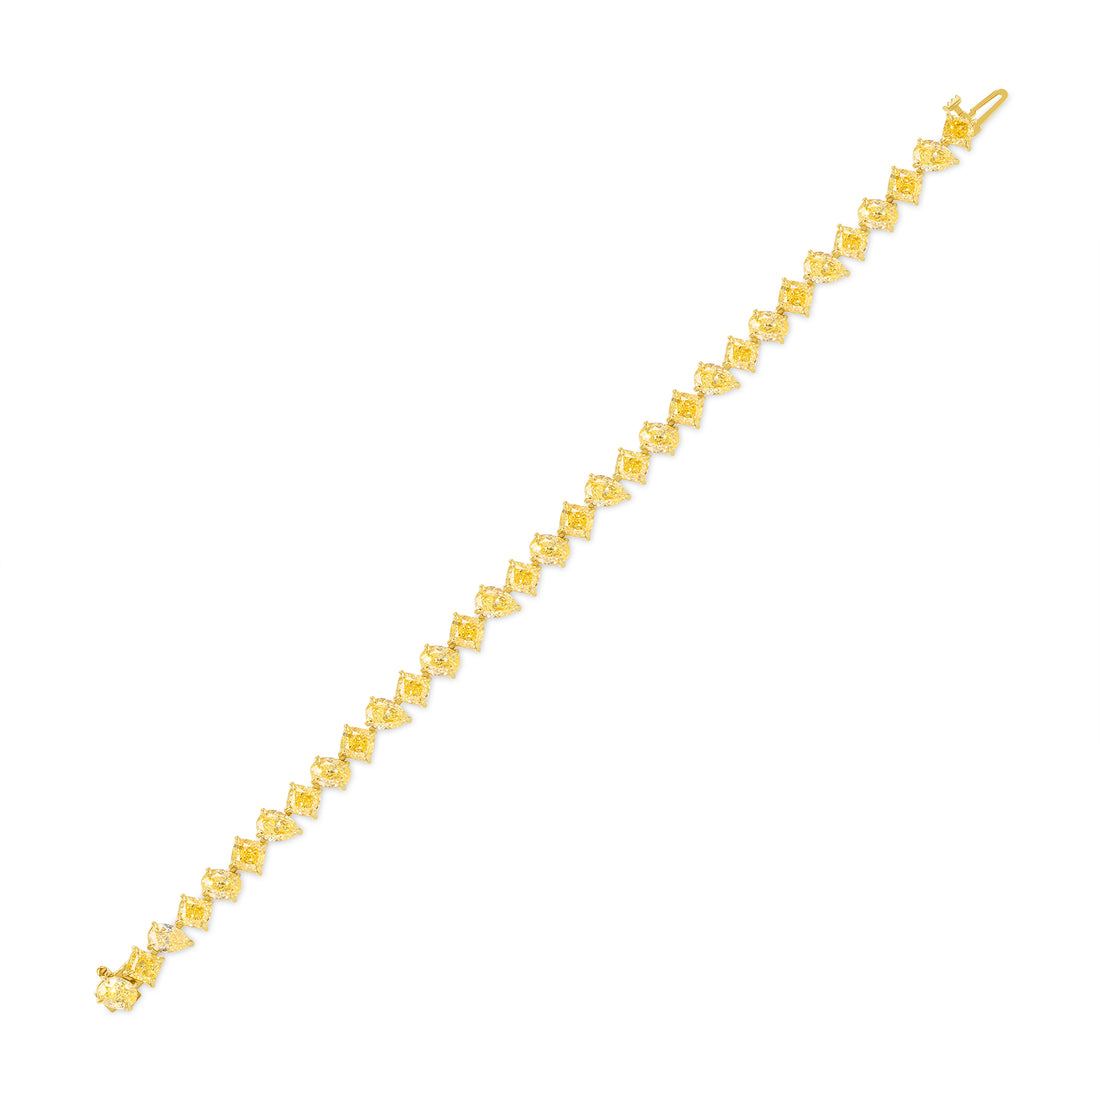 17.78 CT. Mixed Cut Fancy Yellow Diamond Tennis Bracelet in 18K Yellow Gold